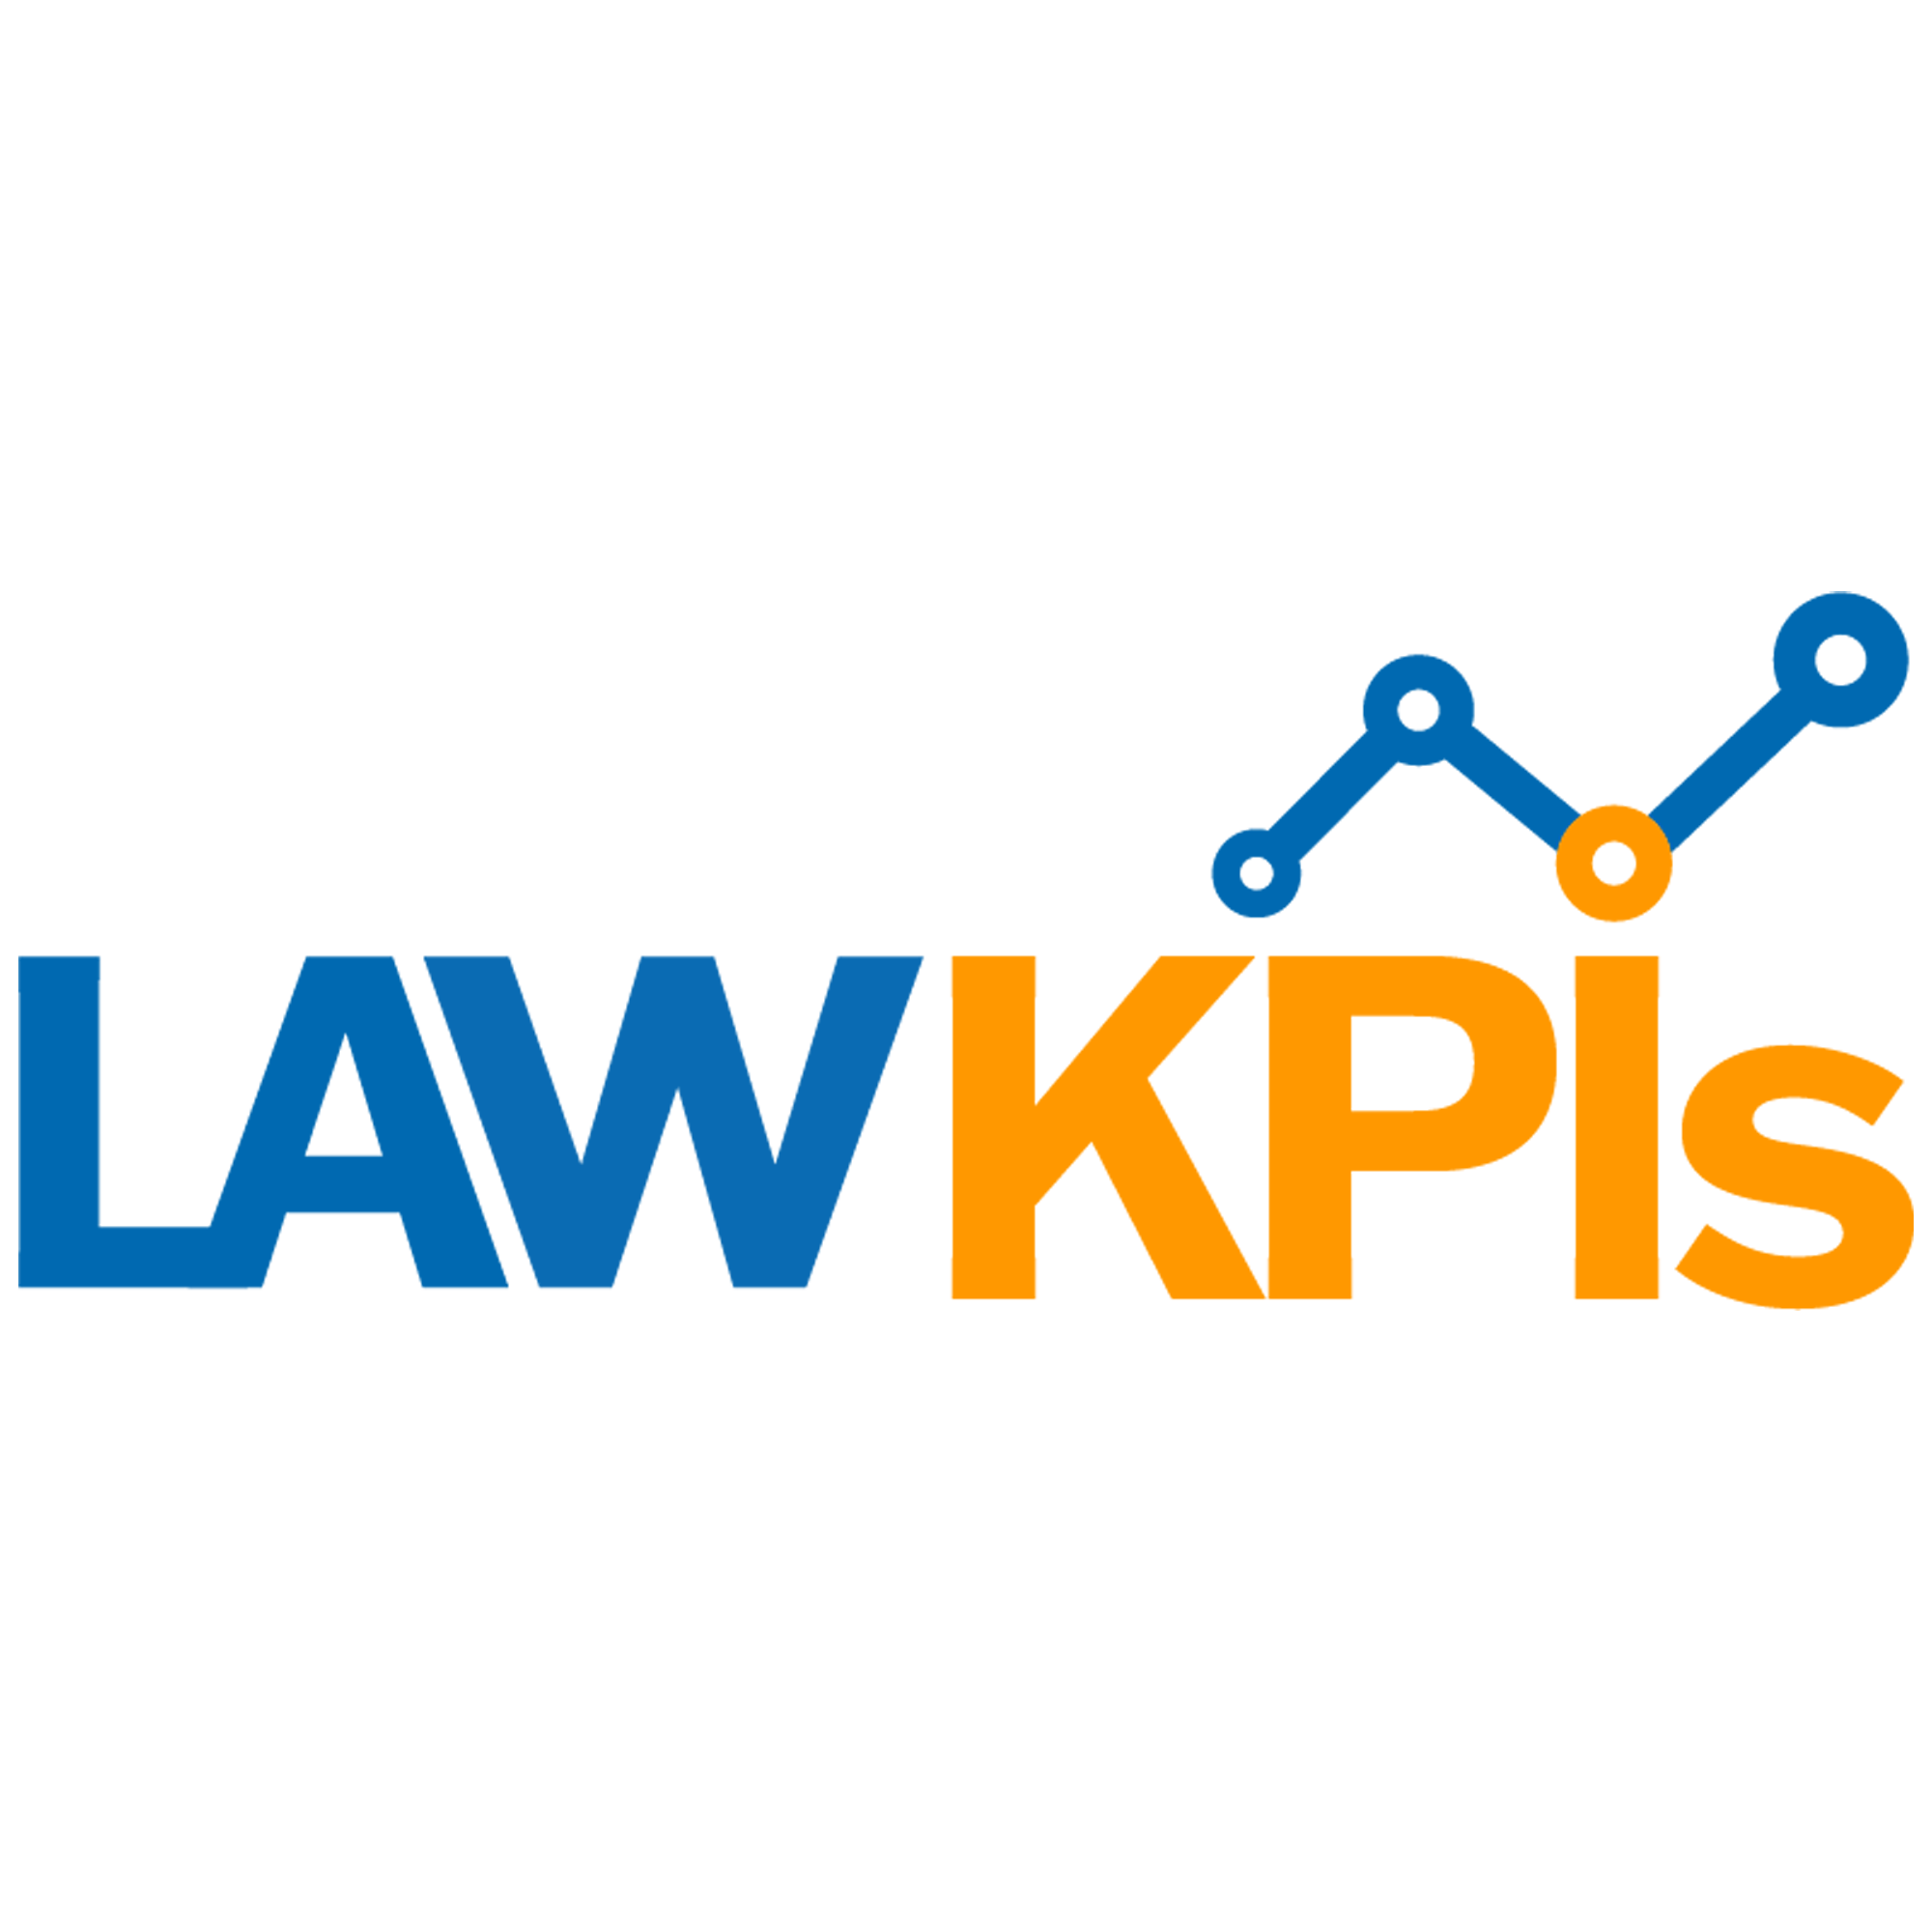 Sponsor Logo - LawKPIs